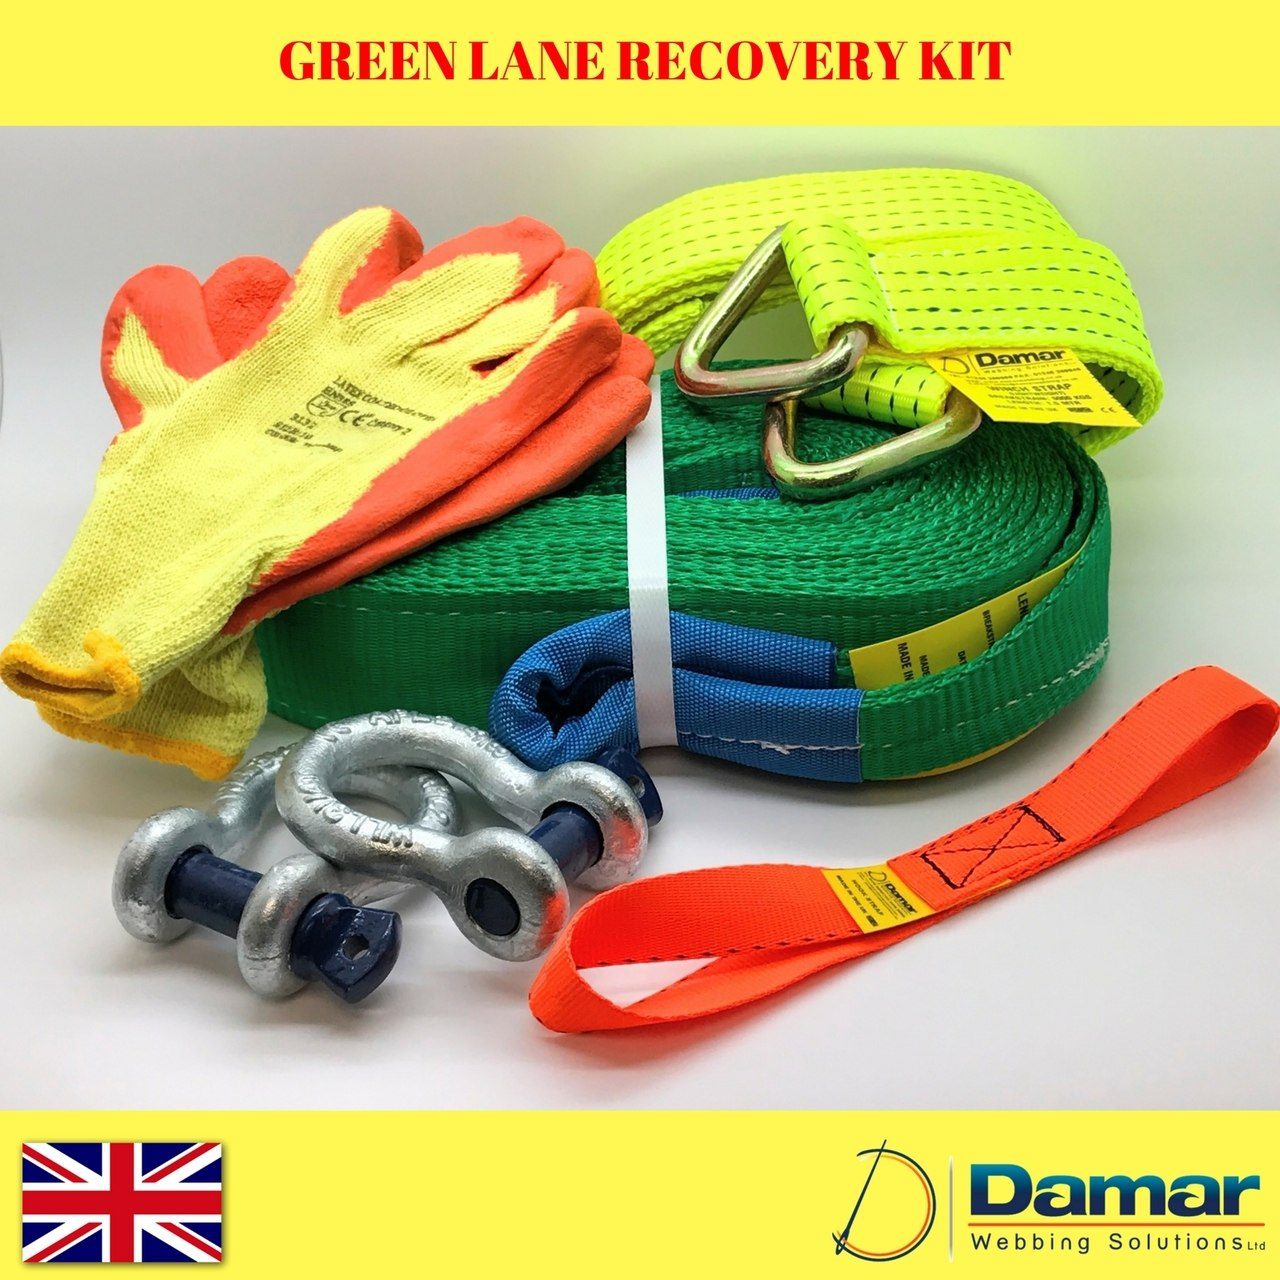 Green lane 4X4 offroad recovery kit - Damar Webbing Solutions Ltd